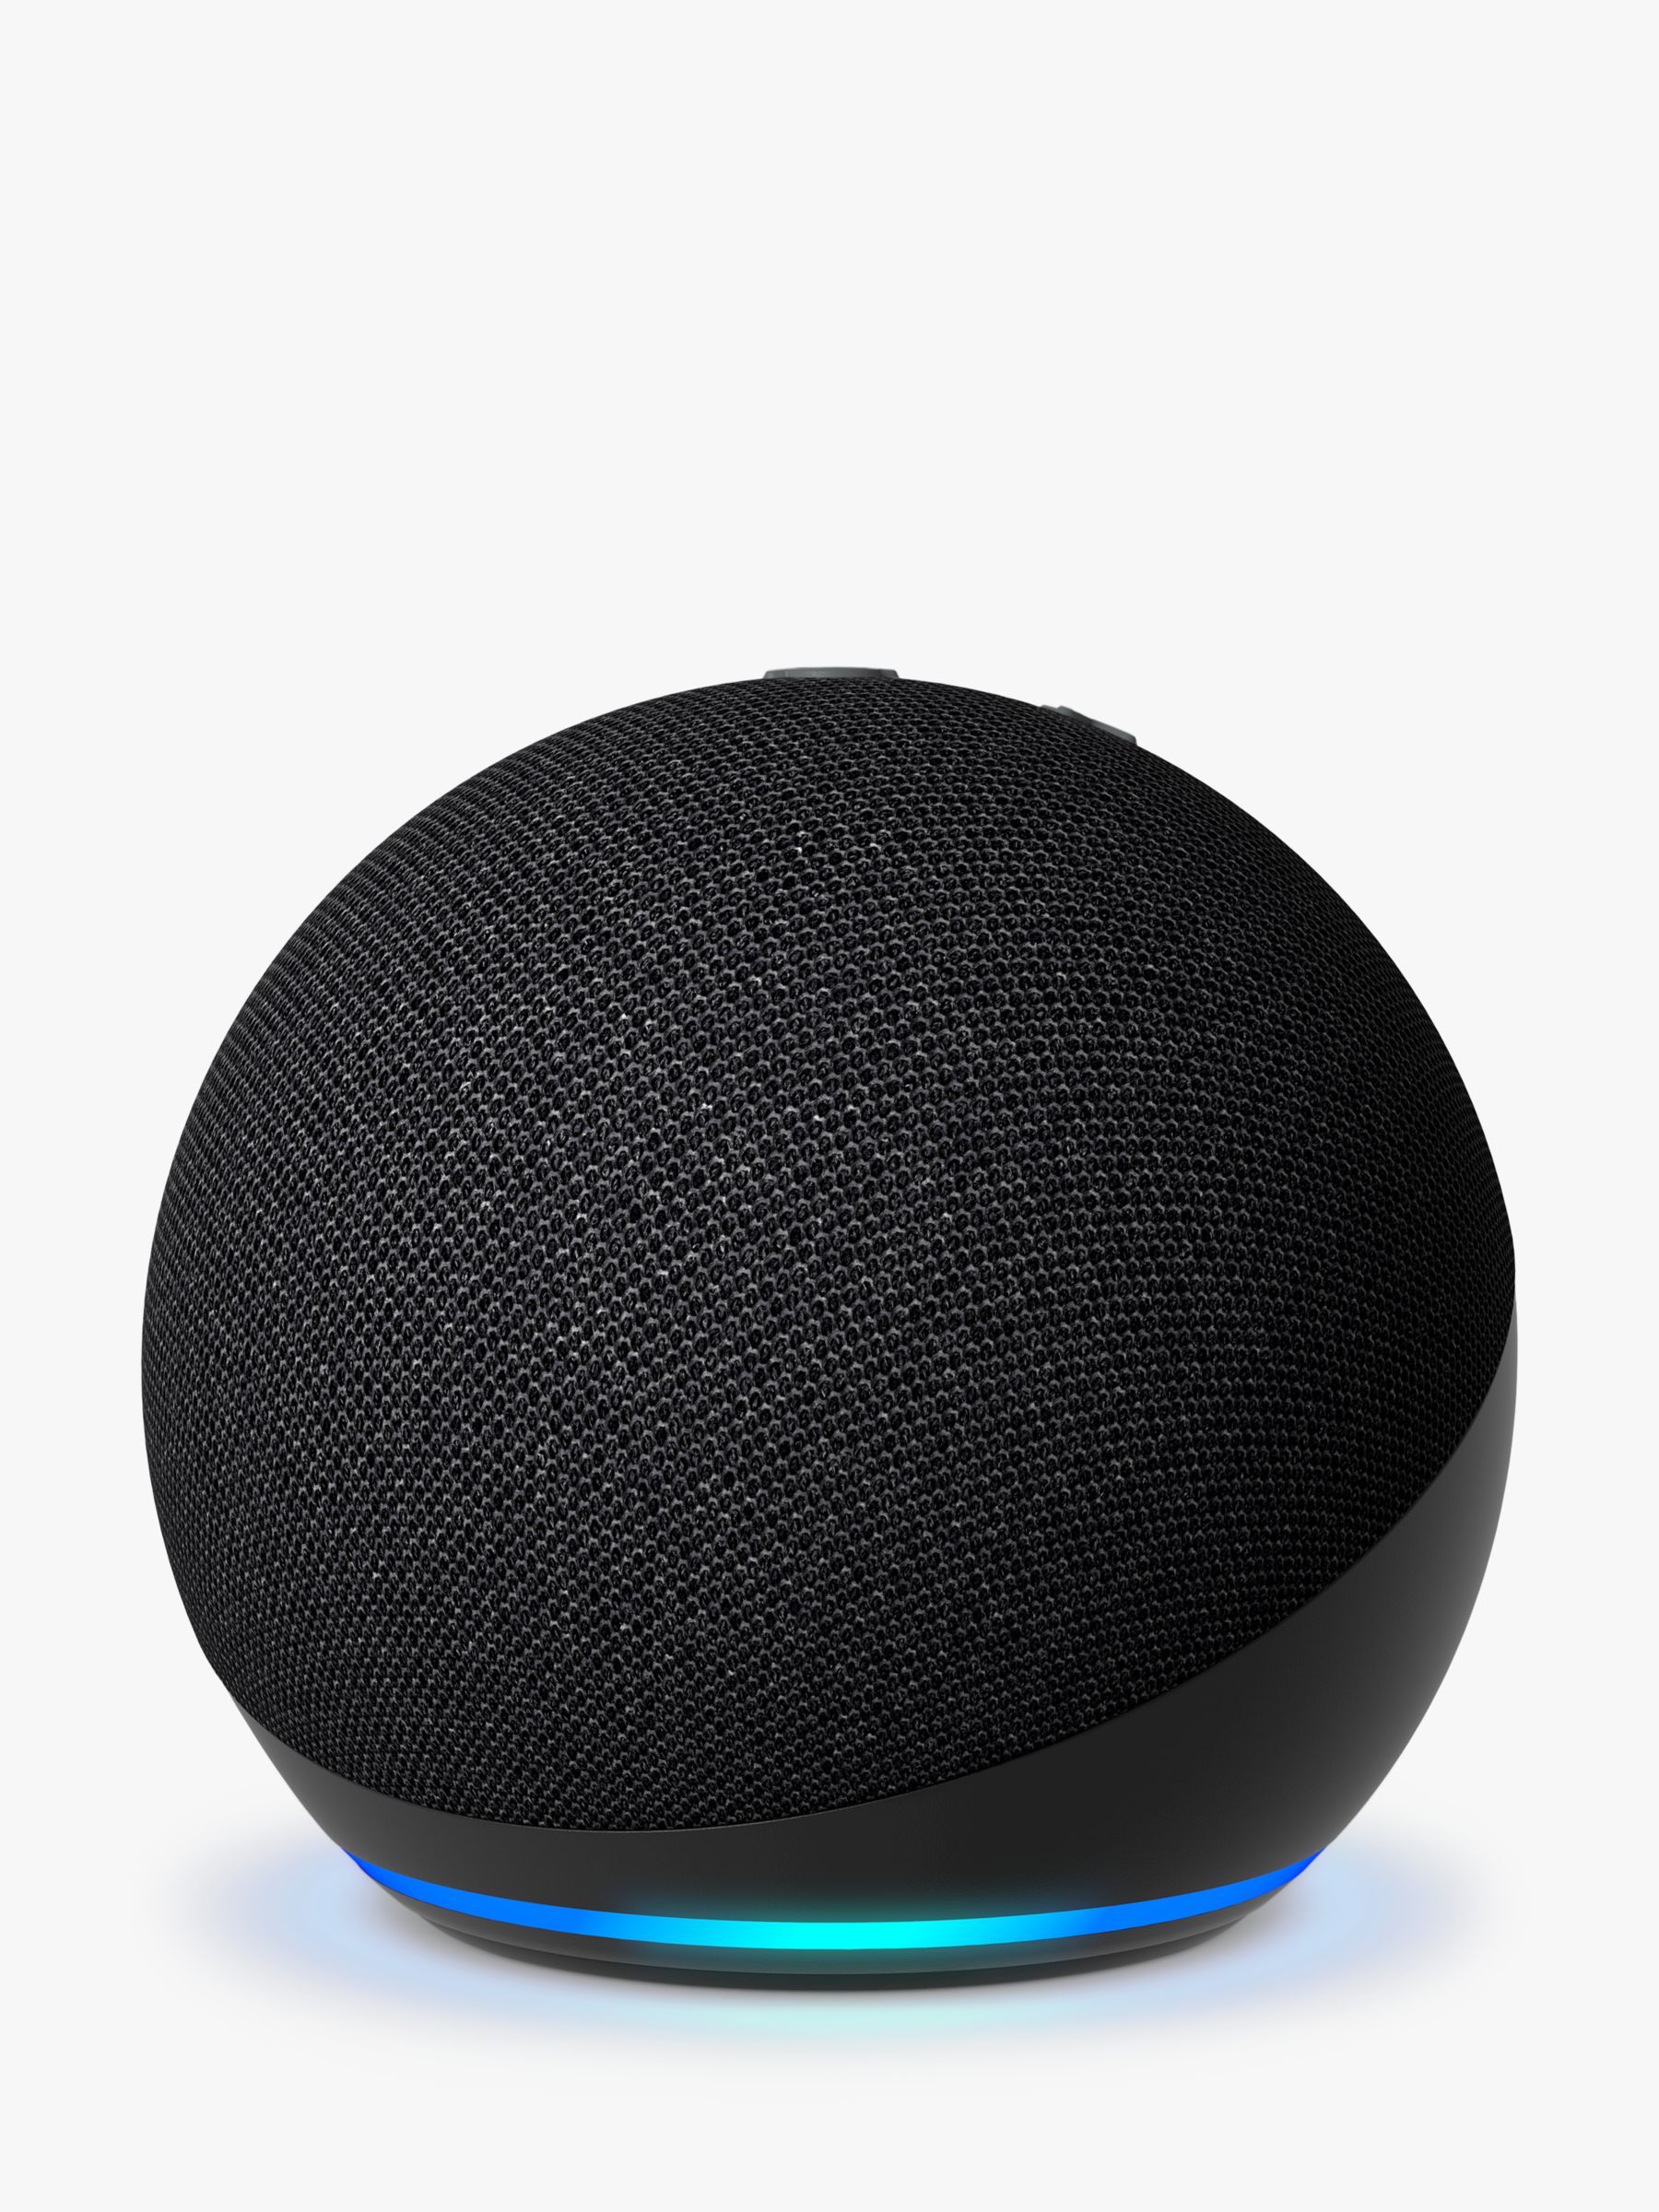 Echo Auto Smart Speaker with Alexa - Black in the Speakers